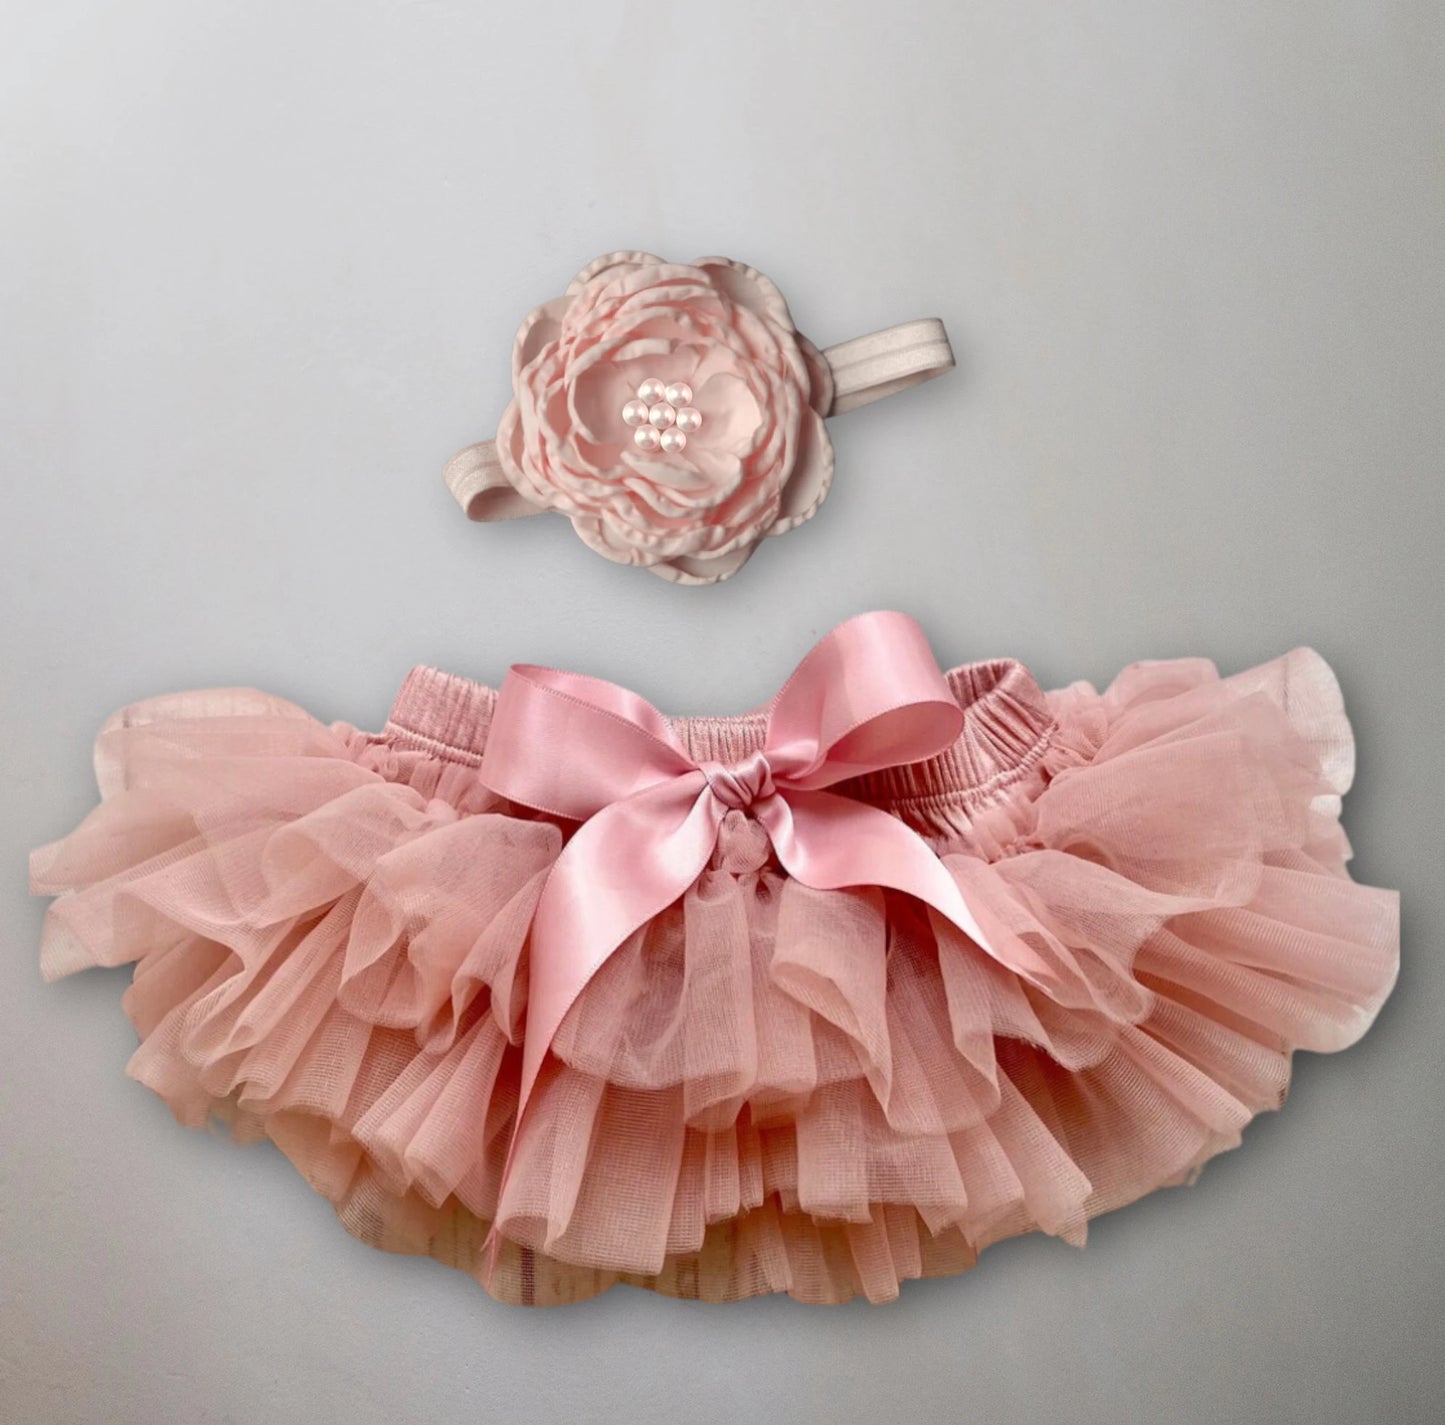 Pink tutu skirt with matching headband